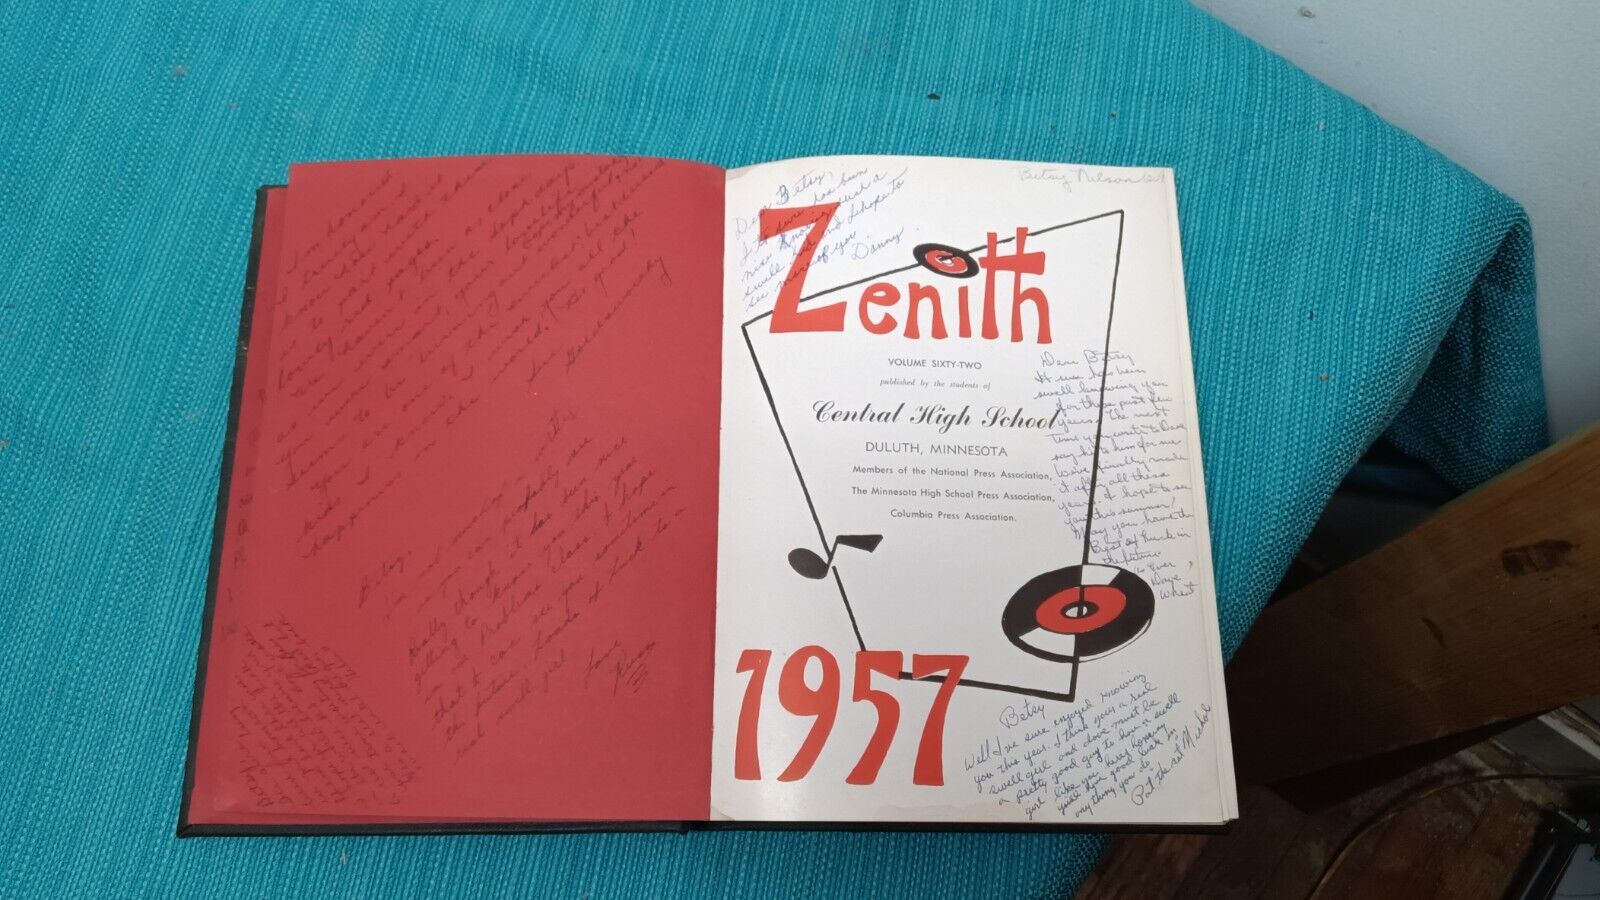 zenith high school year book duluth Minnesota 1957